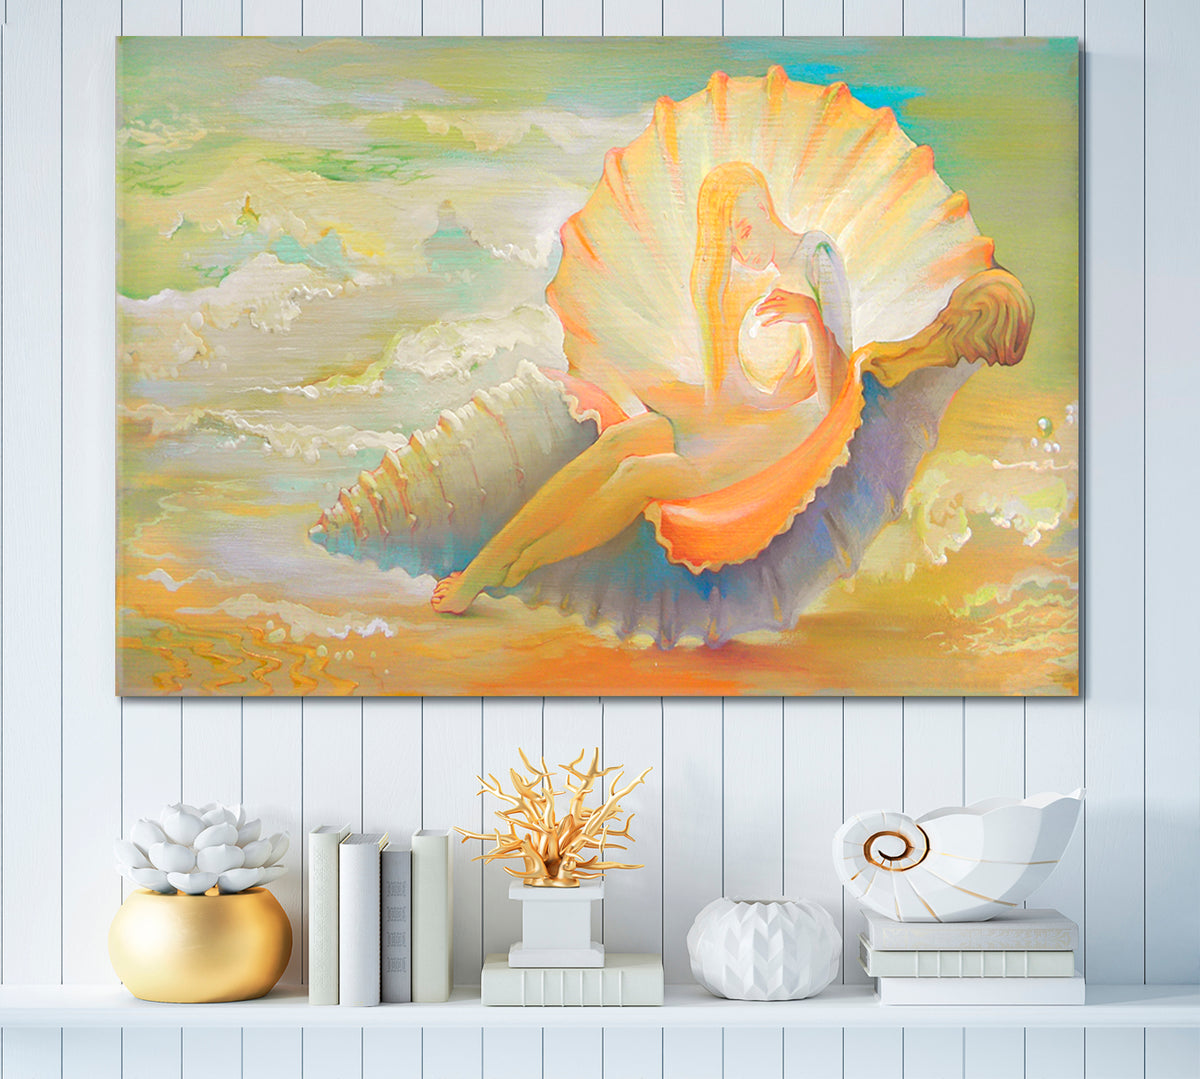 Princess of Seashell Artistic Fantastic Soft Colors Contemporary Art Artesty 1 panel 24" x 16" 